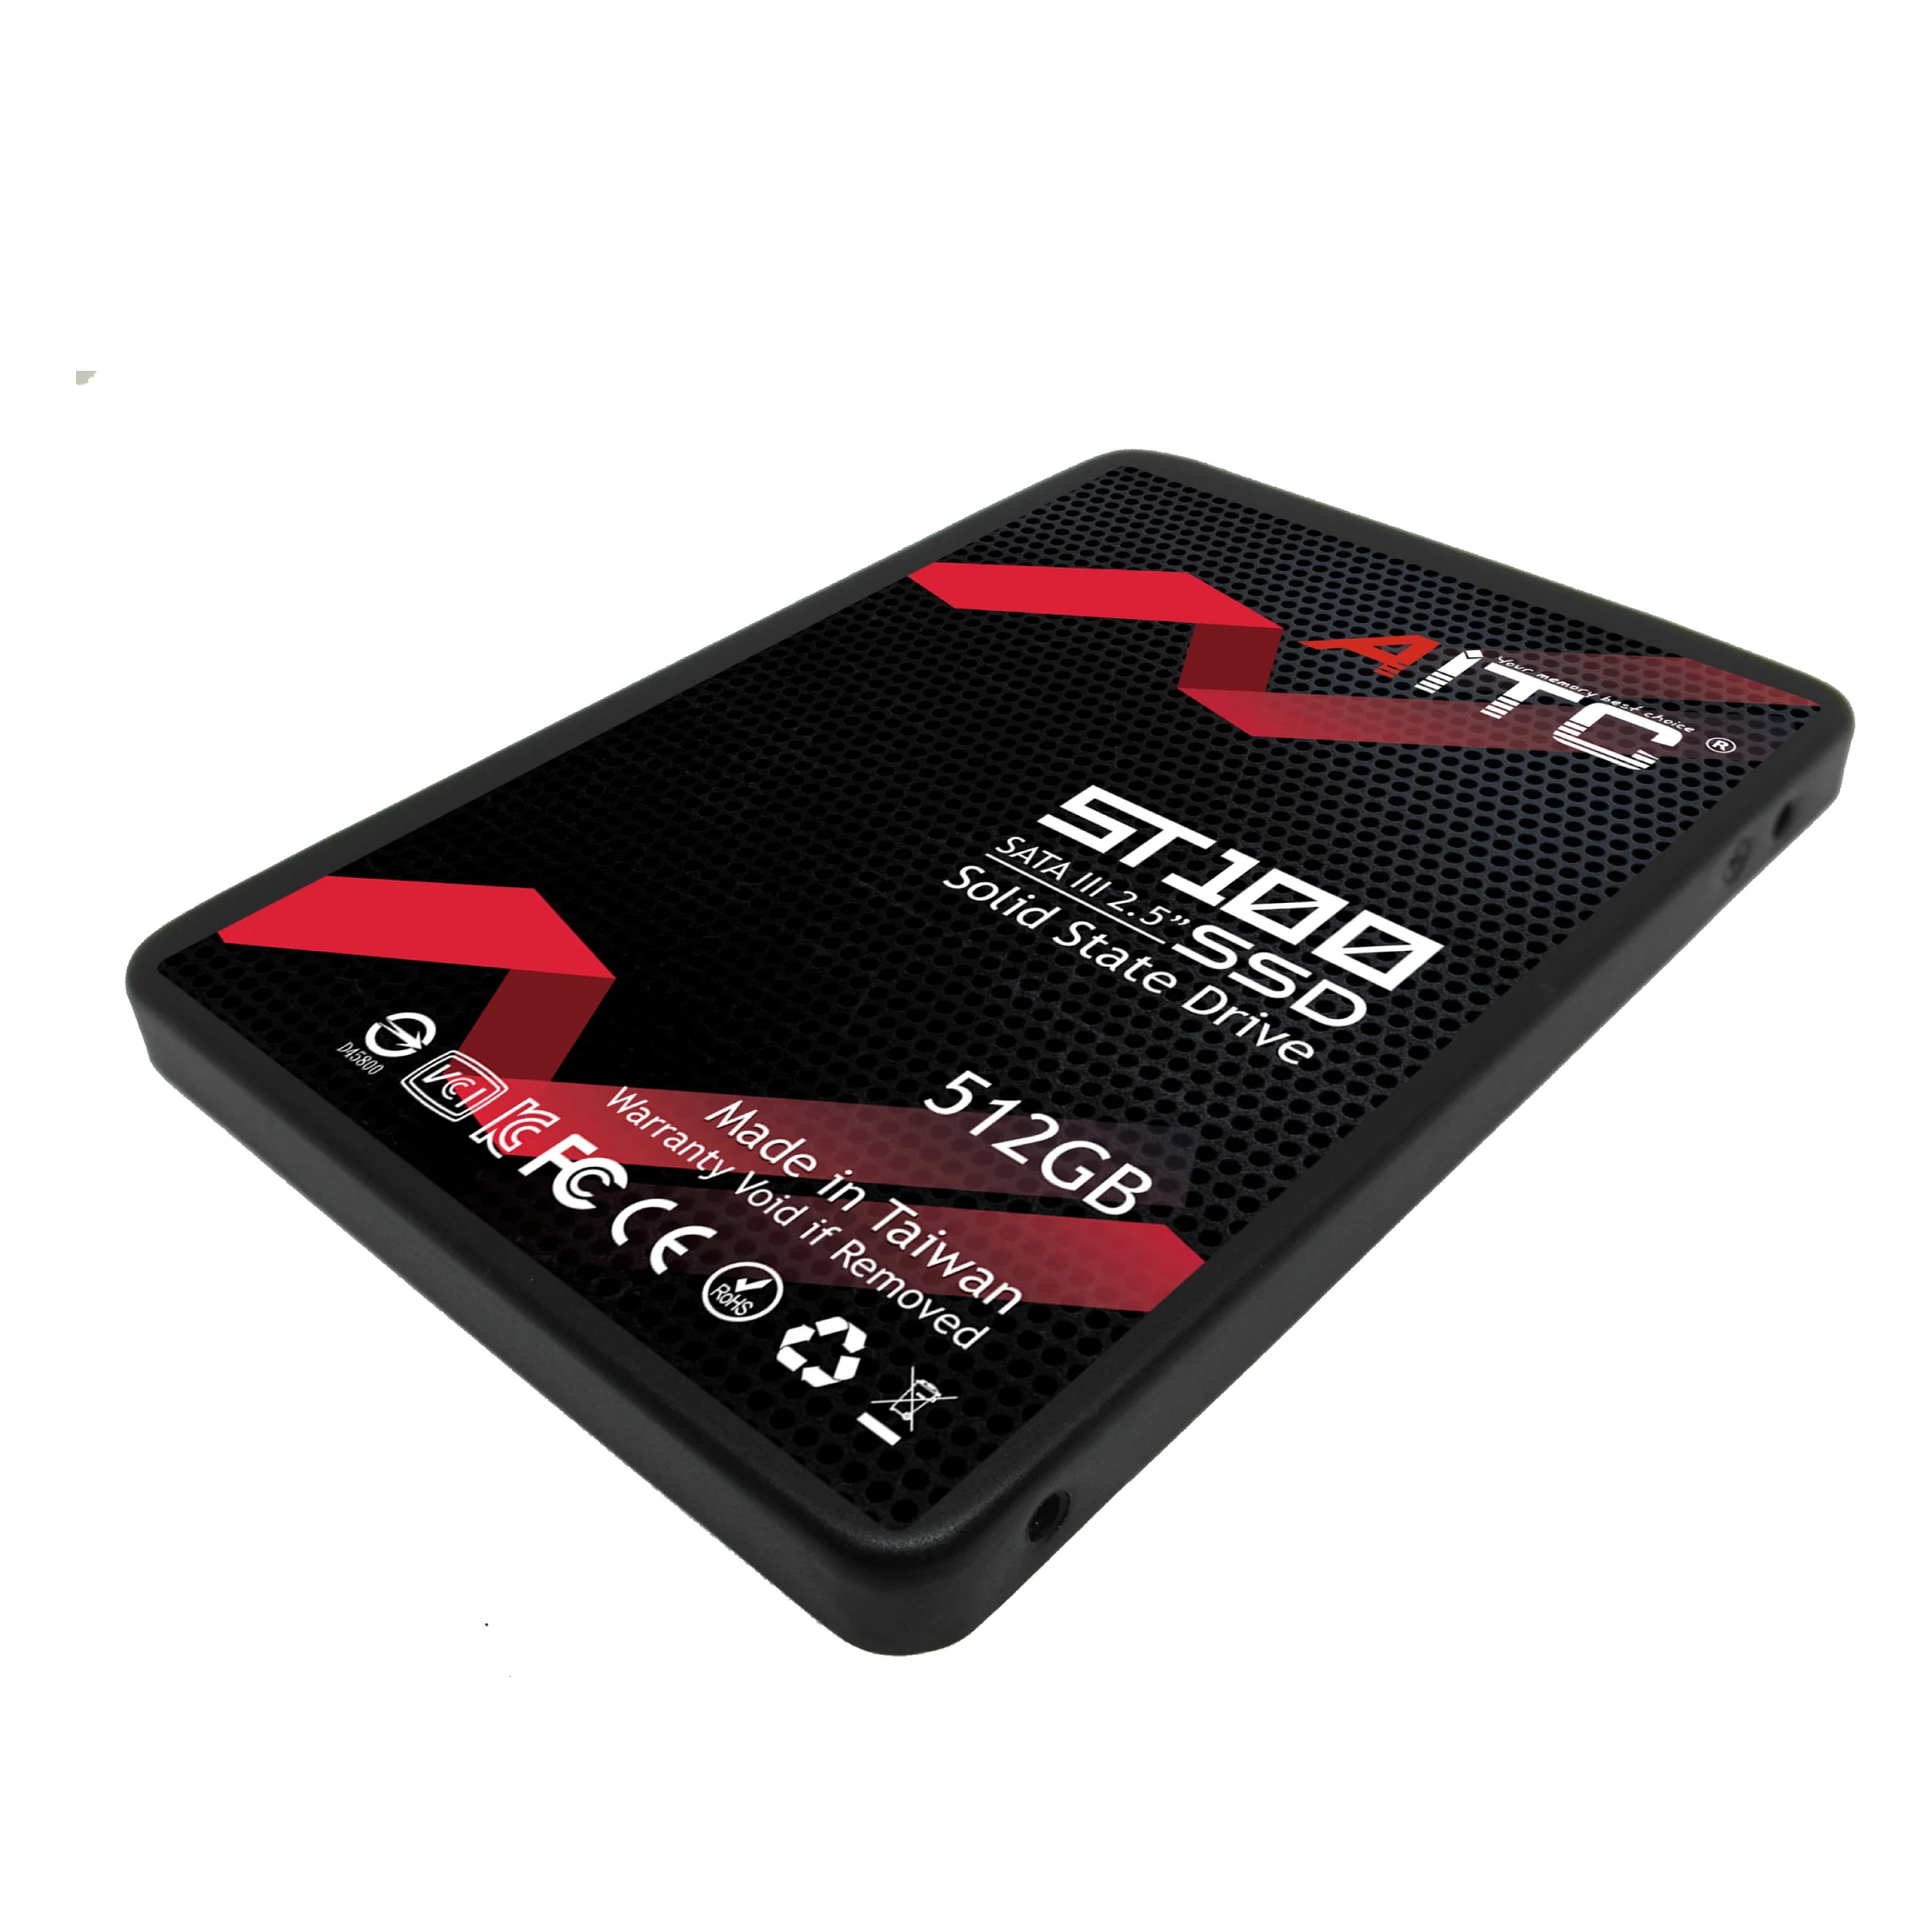 SSD 120. SSD 120gb. SSD 120 GB цена. Ссд 120 ГБ цена. Ssd price